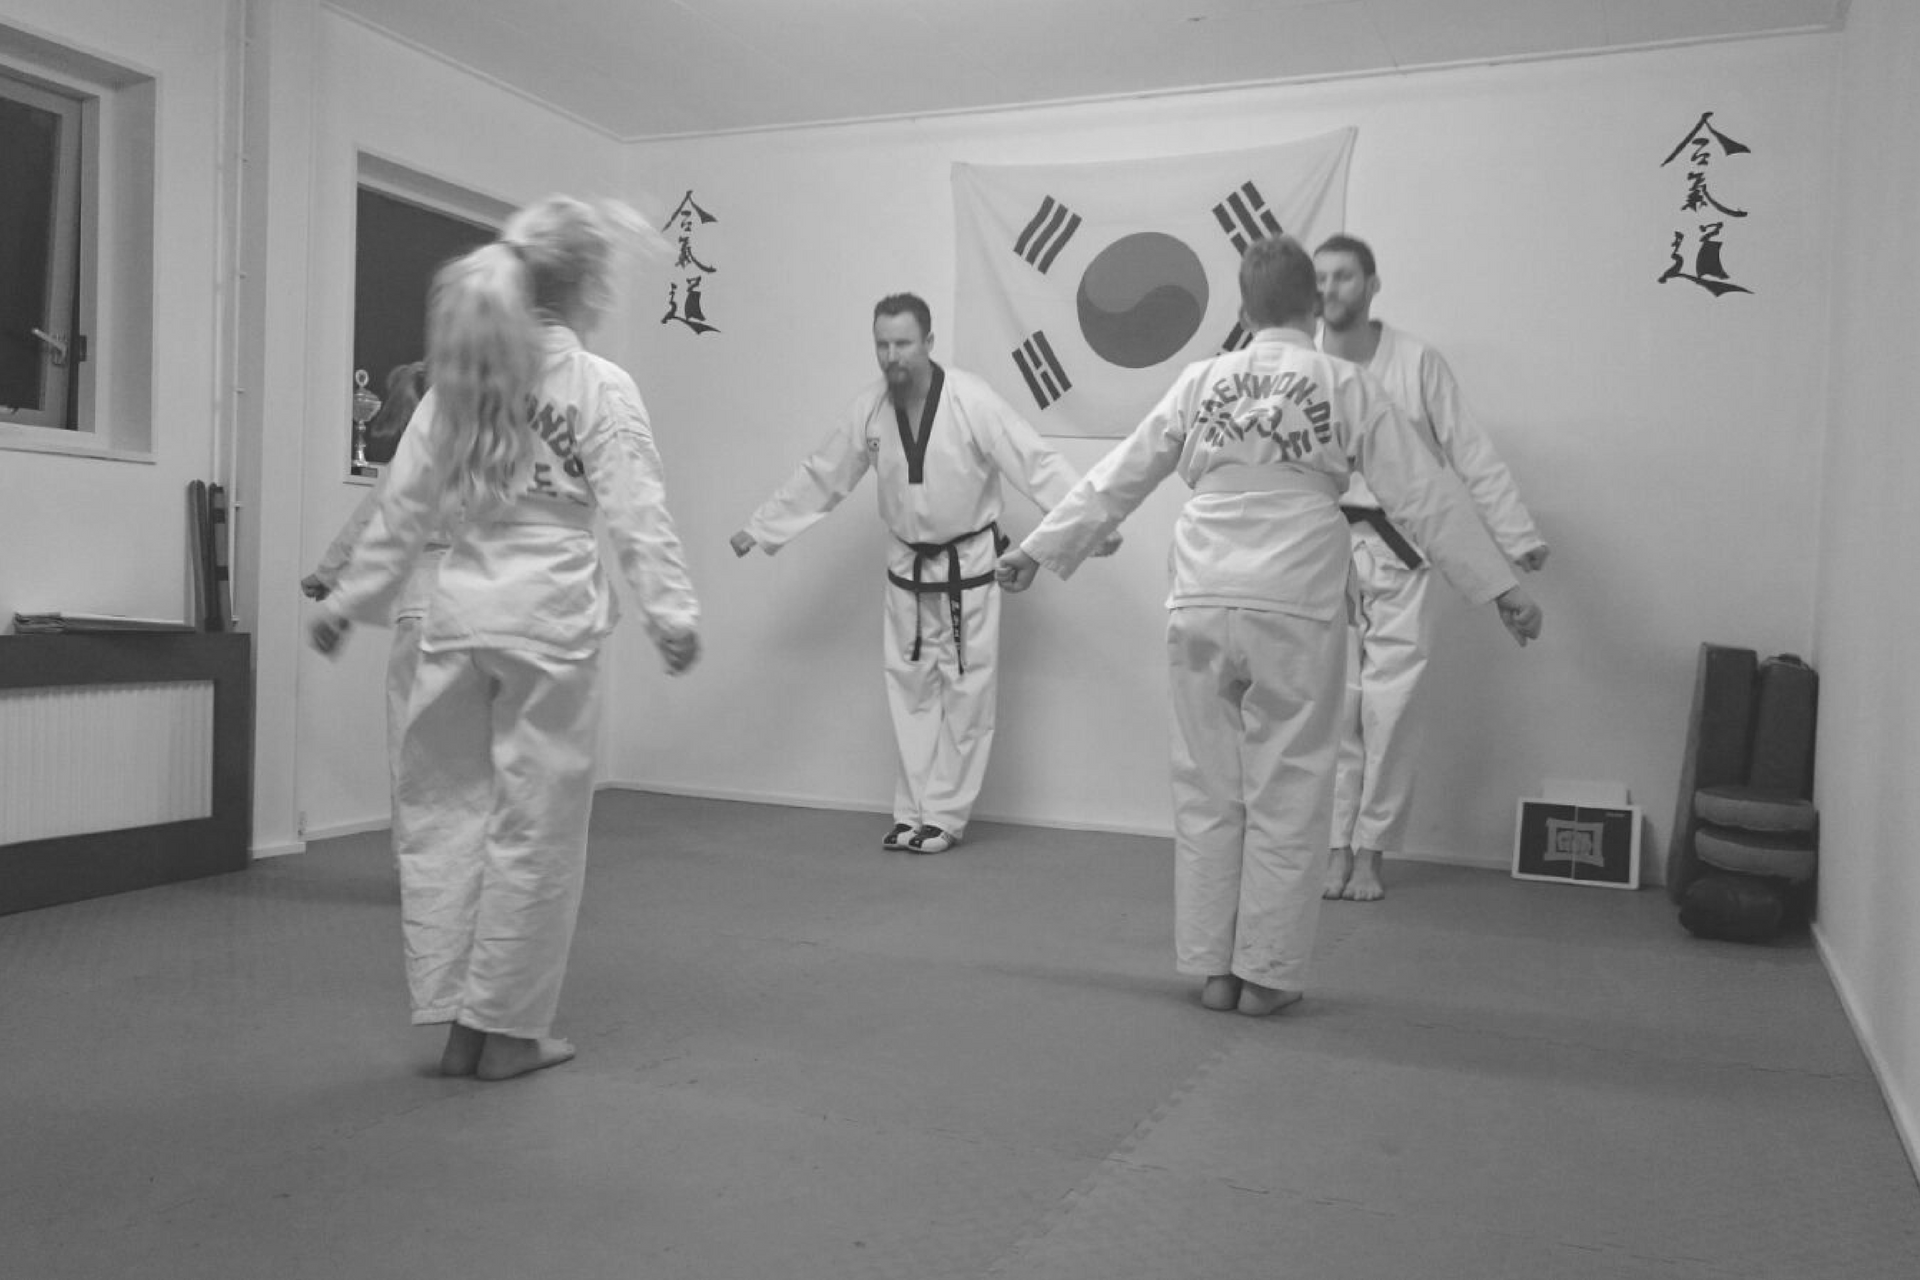 taekwondo training scholen lenn-ard sterk in eigen kracht